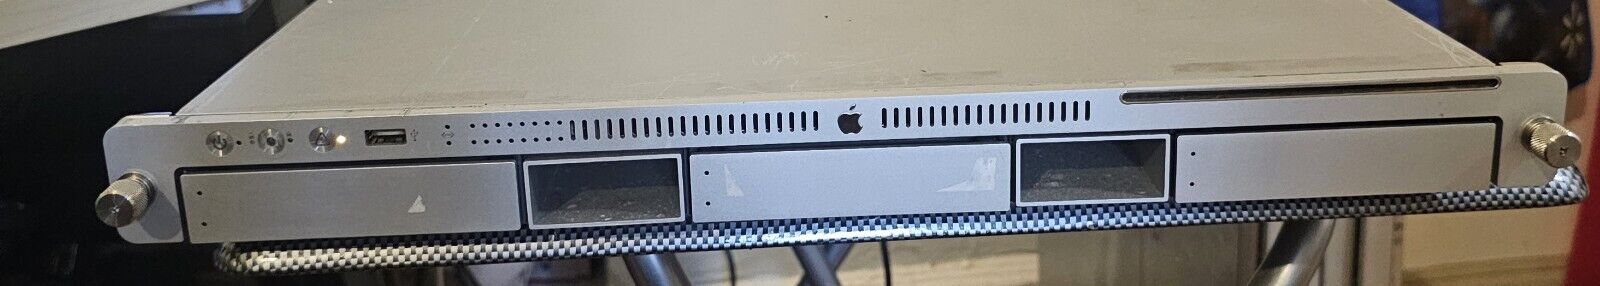 Apple Xserve XEON A1246 2.8 Dual Quad Core Rack Mountable Server 1TB